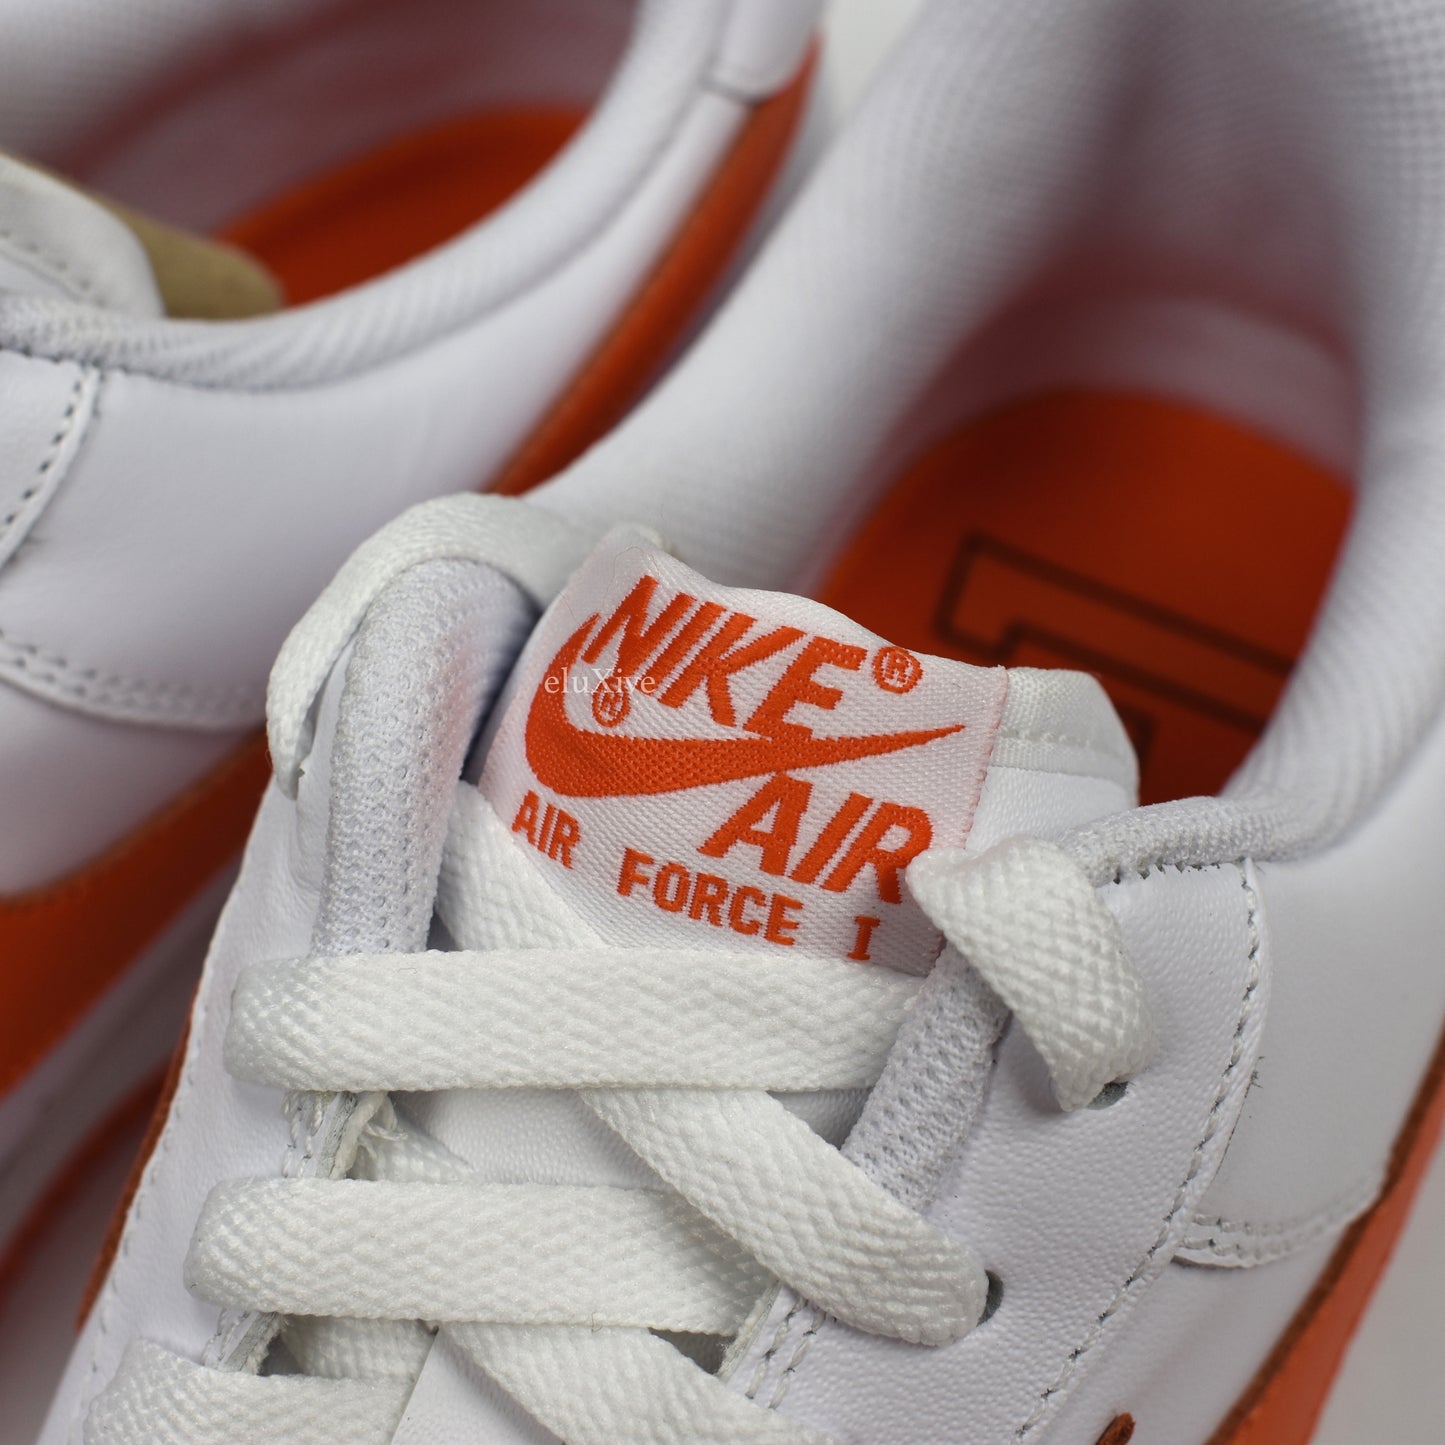 Nike - Air Force 1 '07 (White/Orange Blaze)